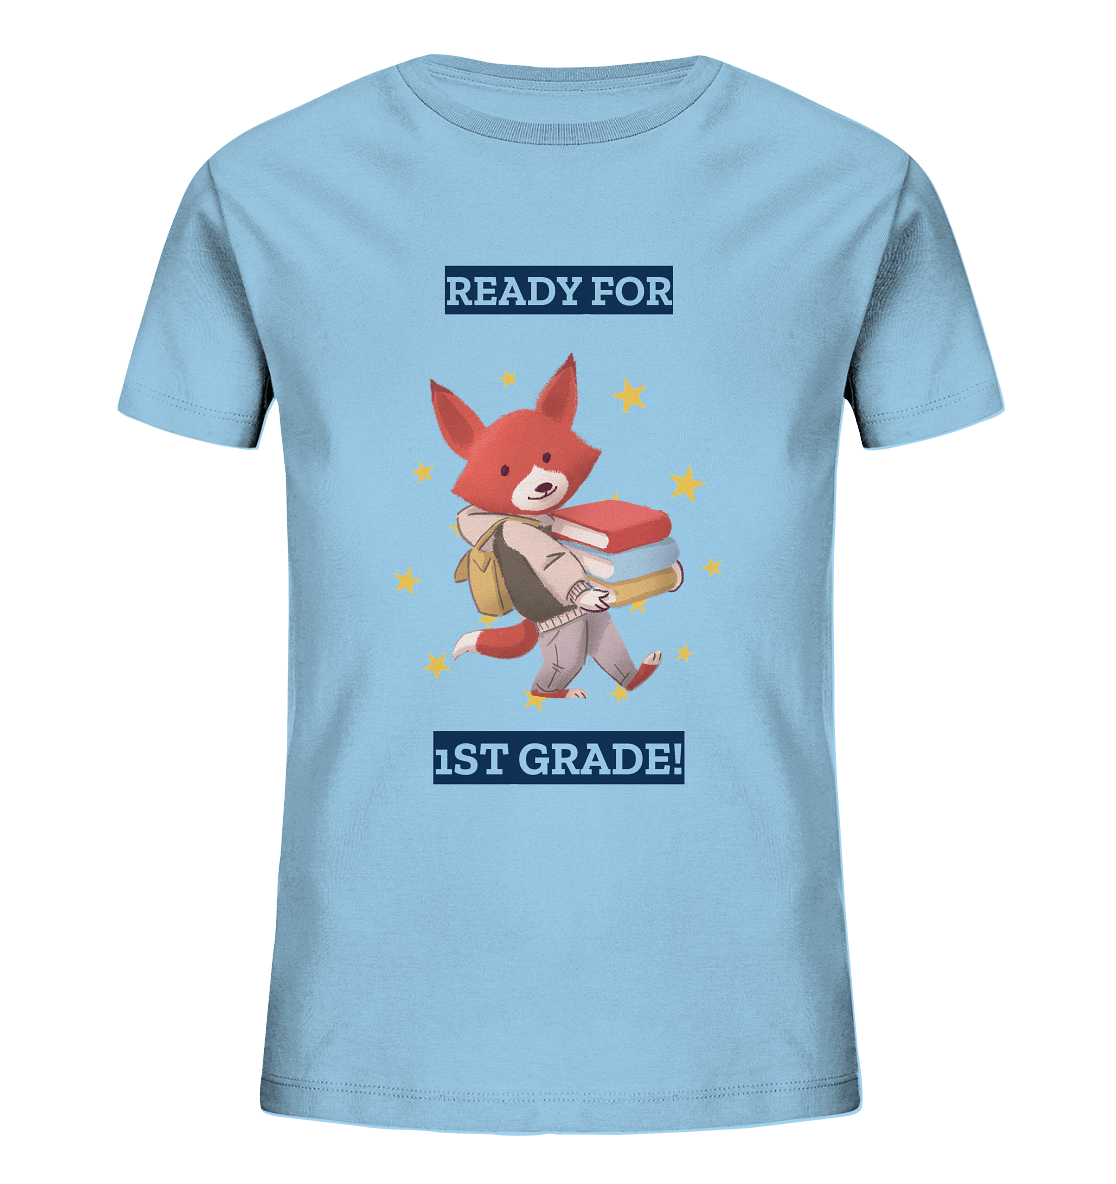 Kinder T-Shirt mit modischen Fuchsprint und  Beschriftung "Ready for 1st Grade!"